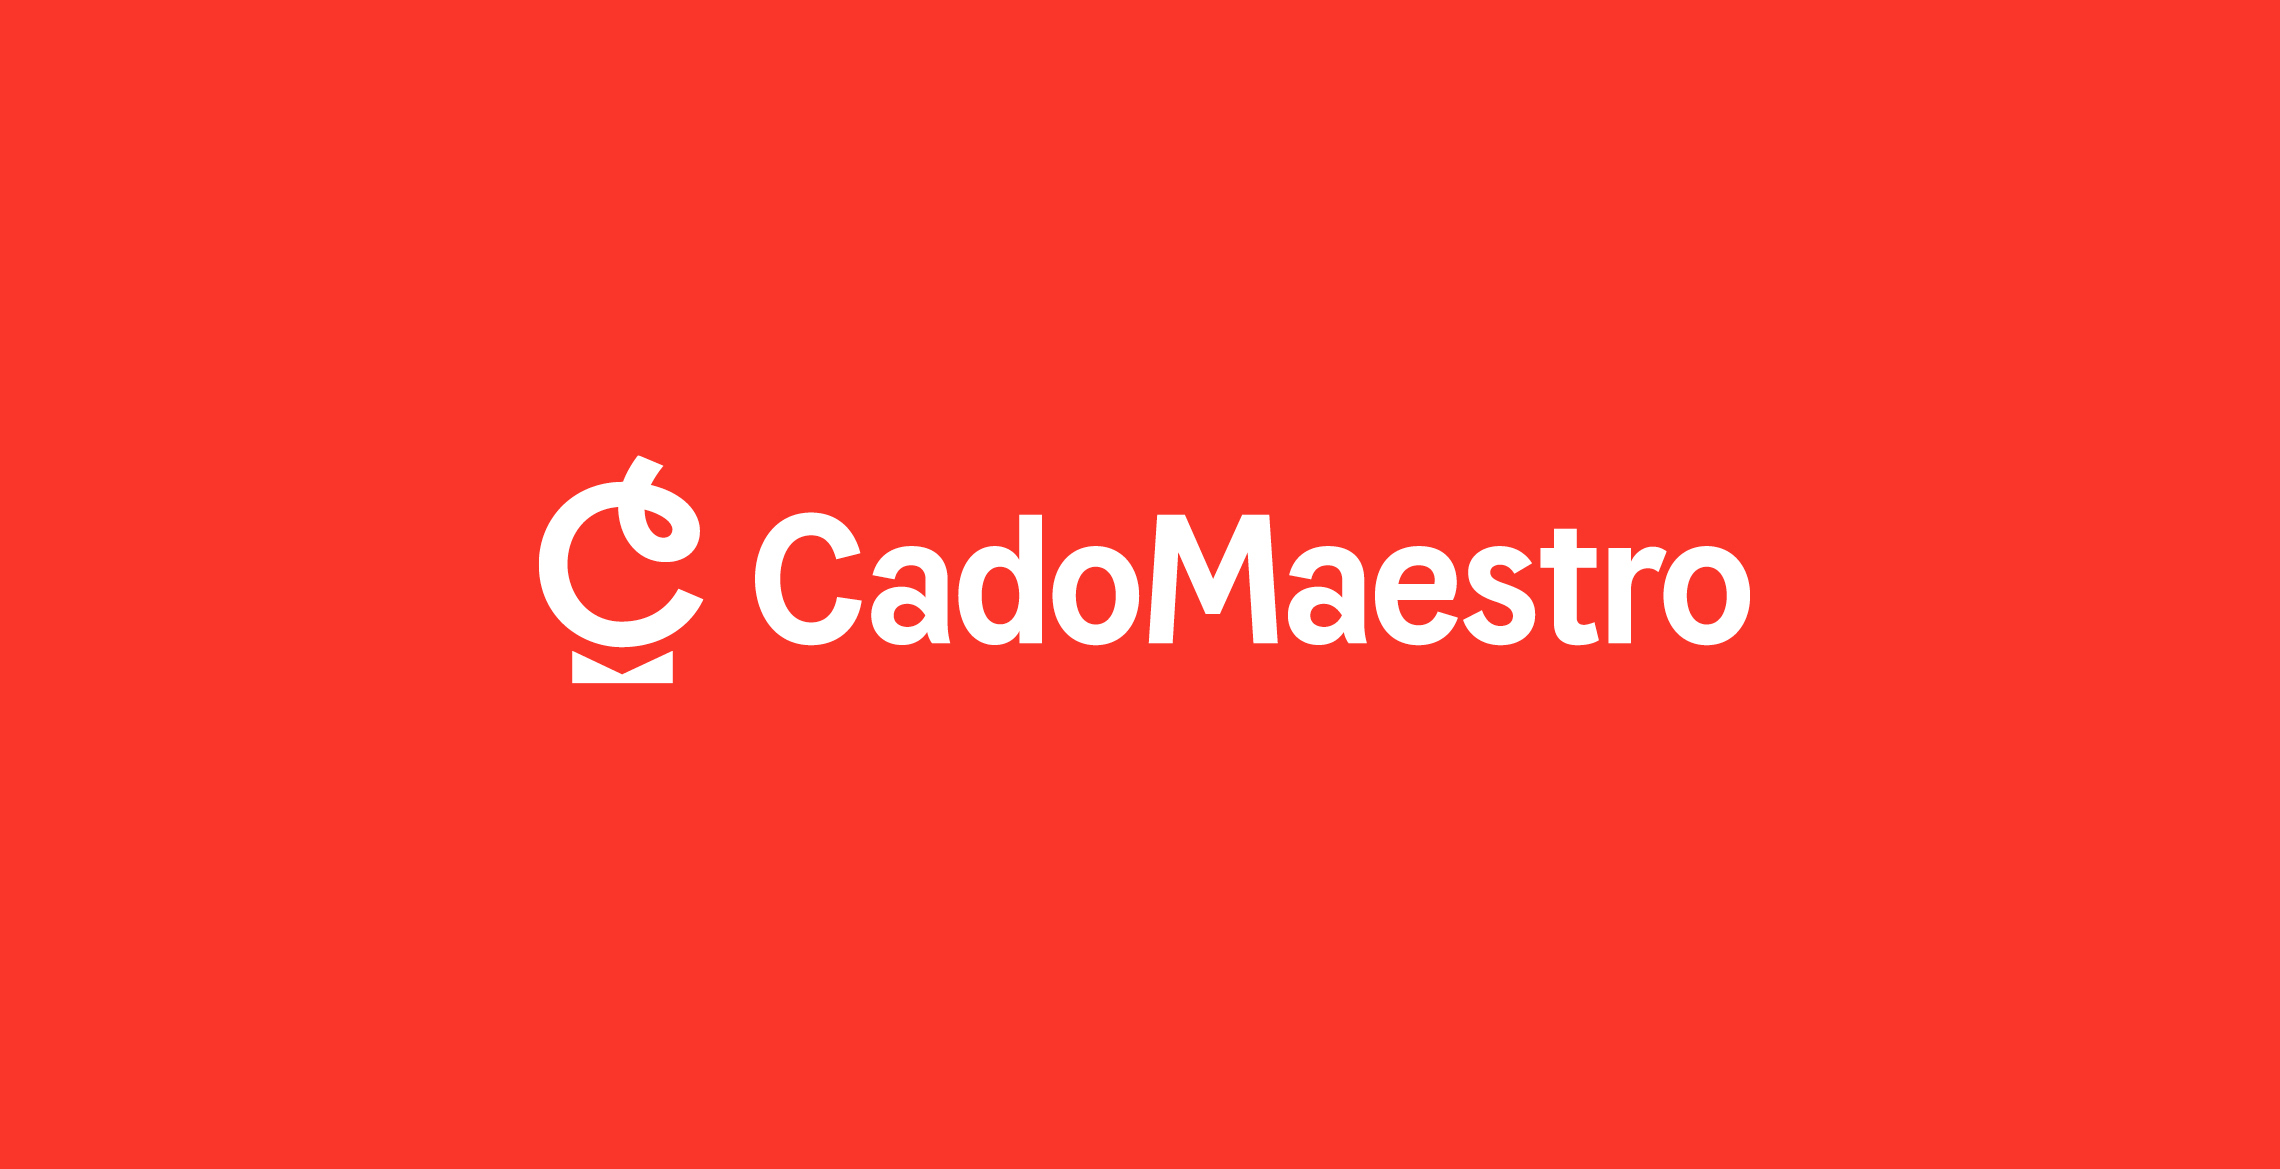 CadoMaestro_Brand_design_logo_header